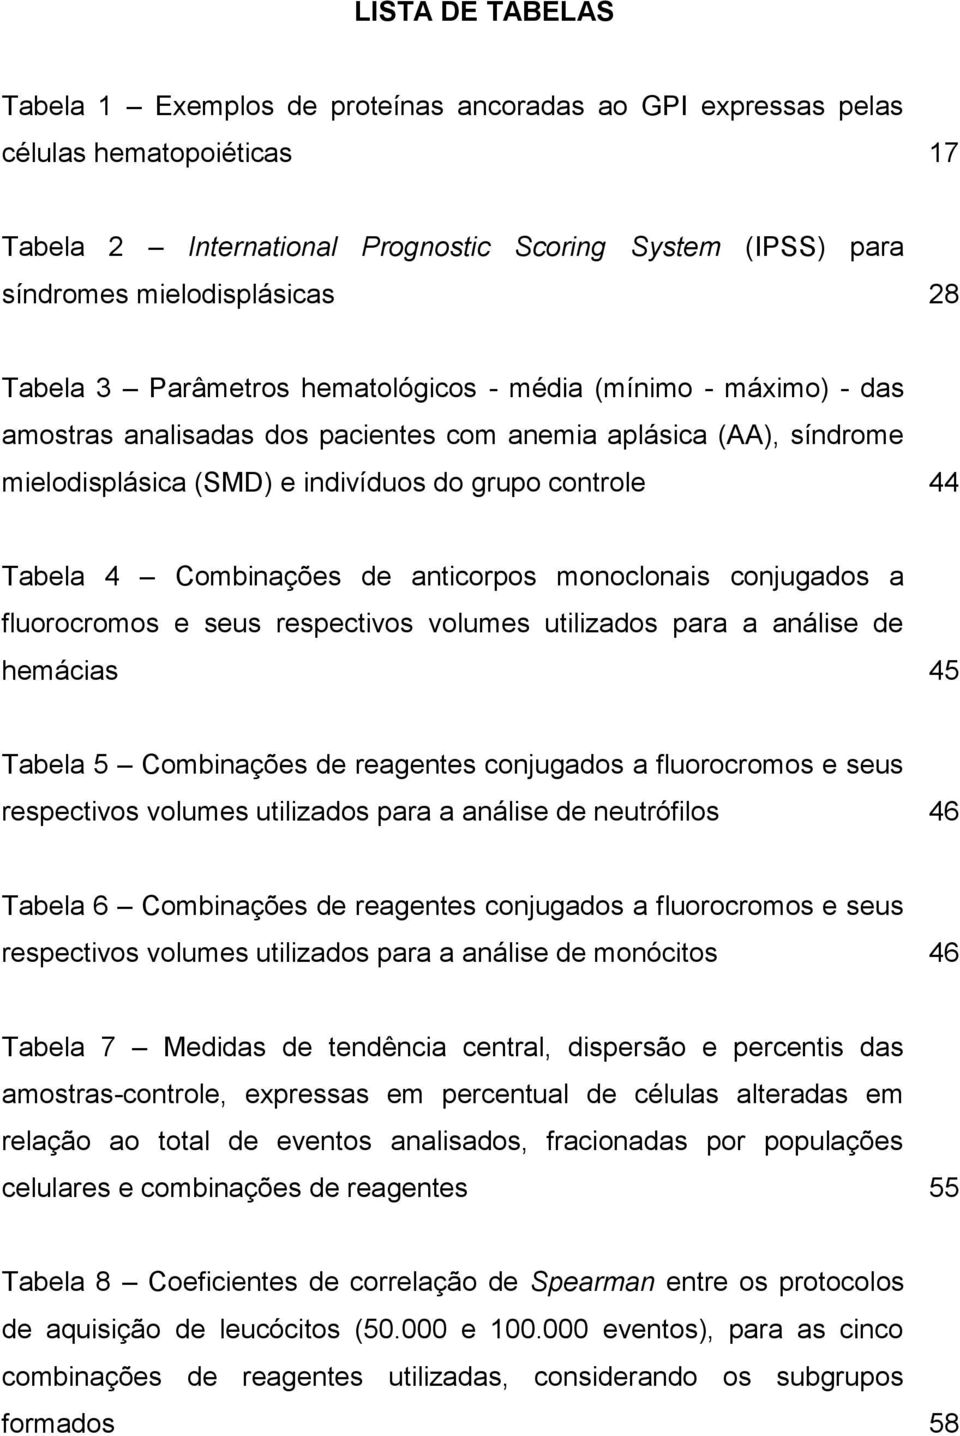 Tabela 4 Combinações de anticorpos monoclonais conjugados a fluorocromos e seus respectivos volumes utilizados para a análise de hemácias 45 Tabela 5 Combinações de reagentes conjugados a